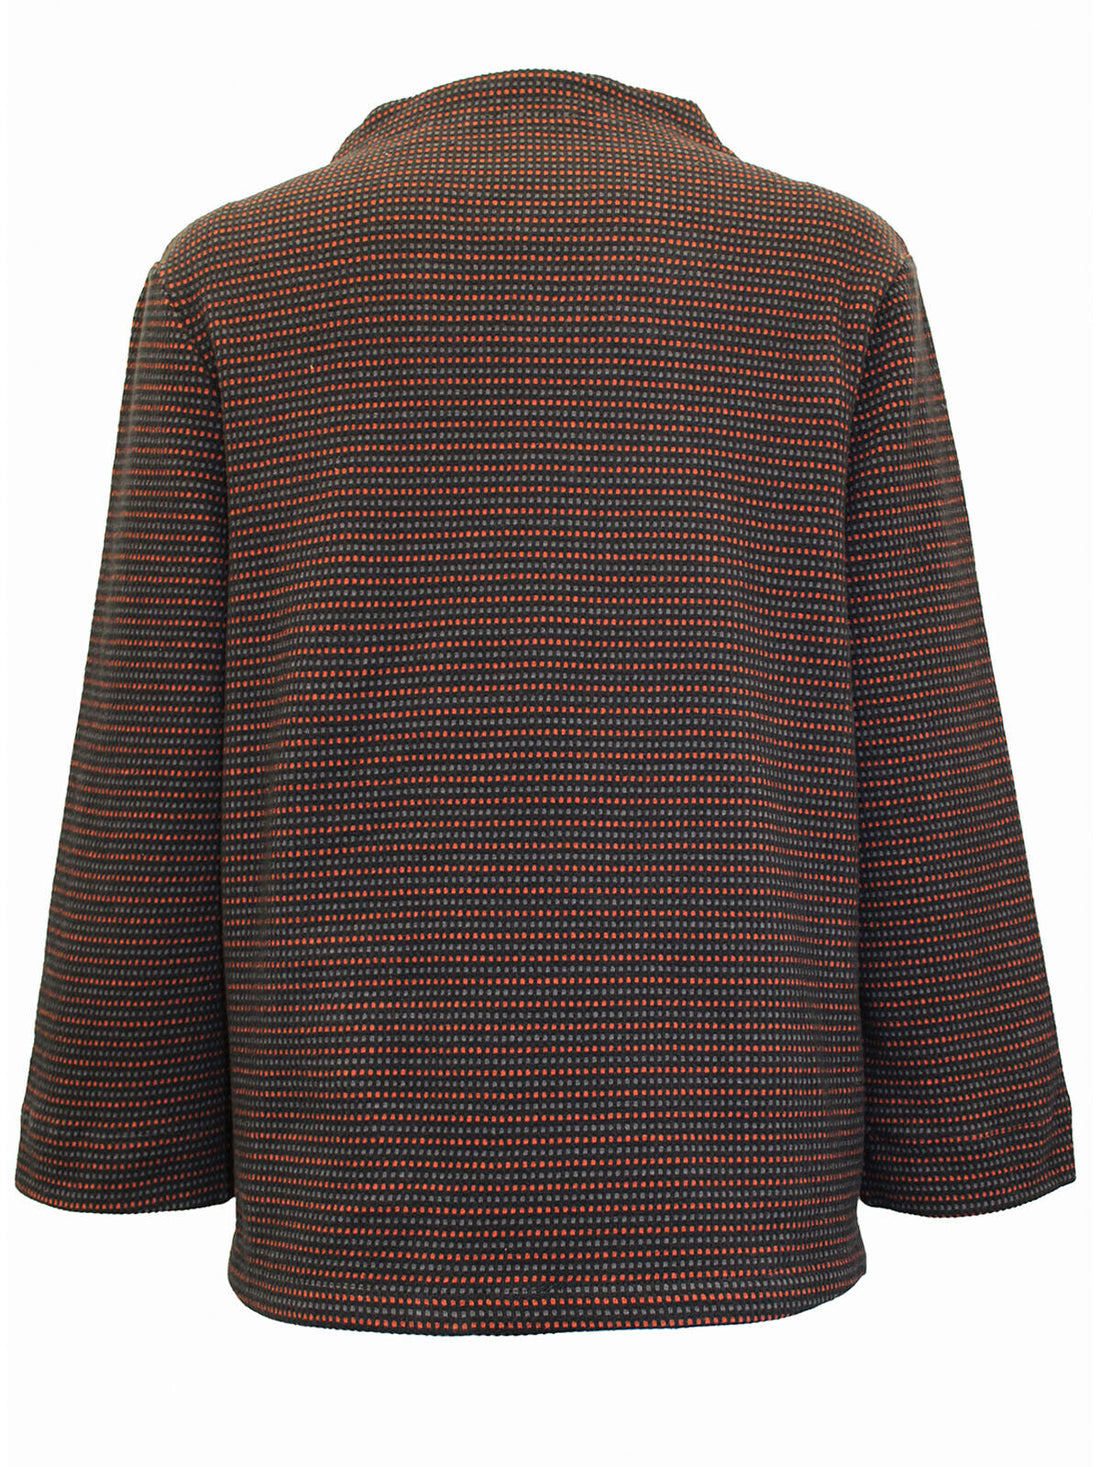 EX Seasalt Multi Stylistic Jacquard Sweatshirt Top Drop Stone Onyx 14-28 RRP £55